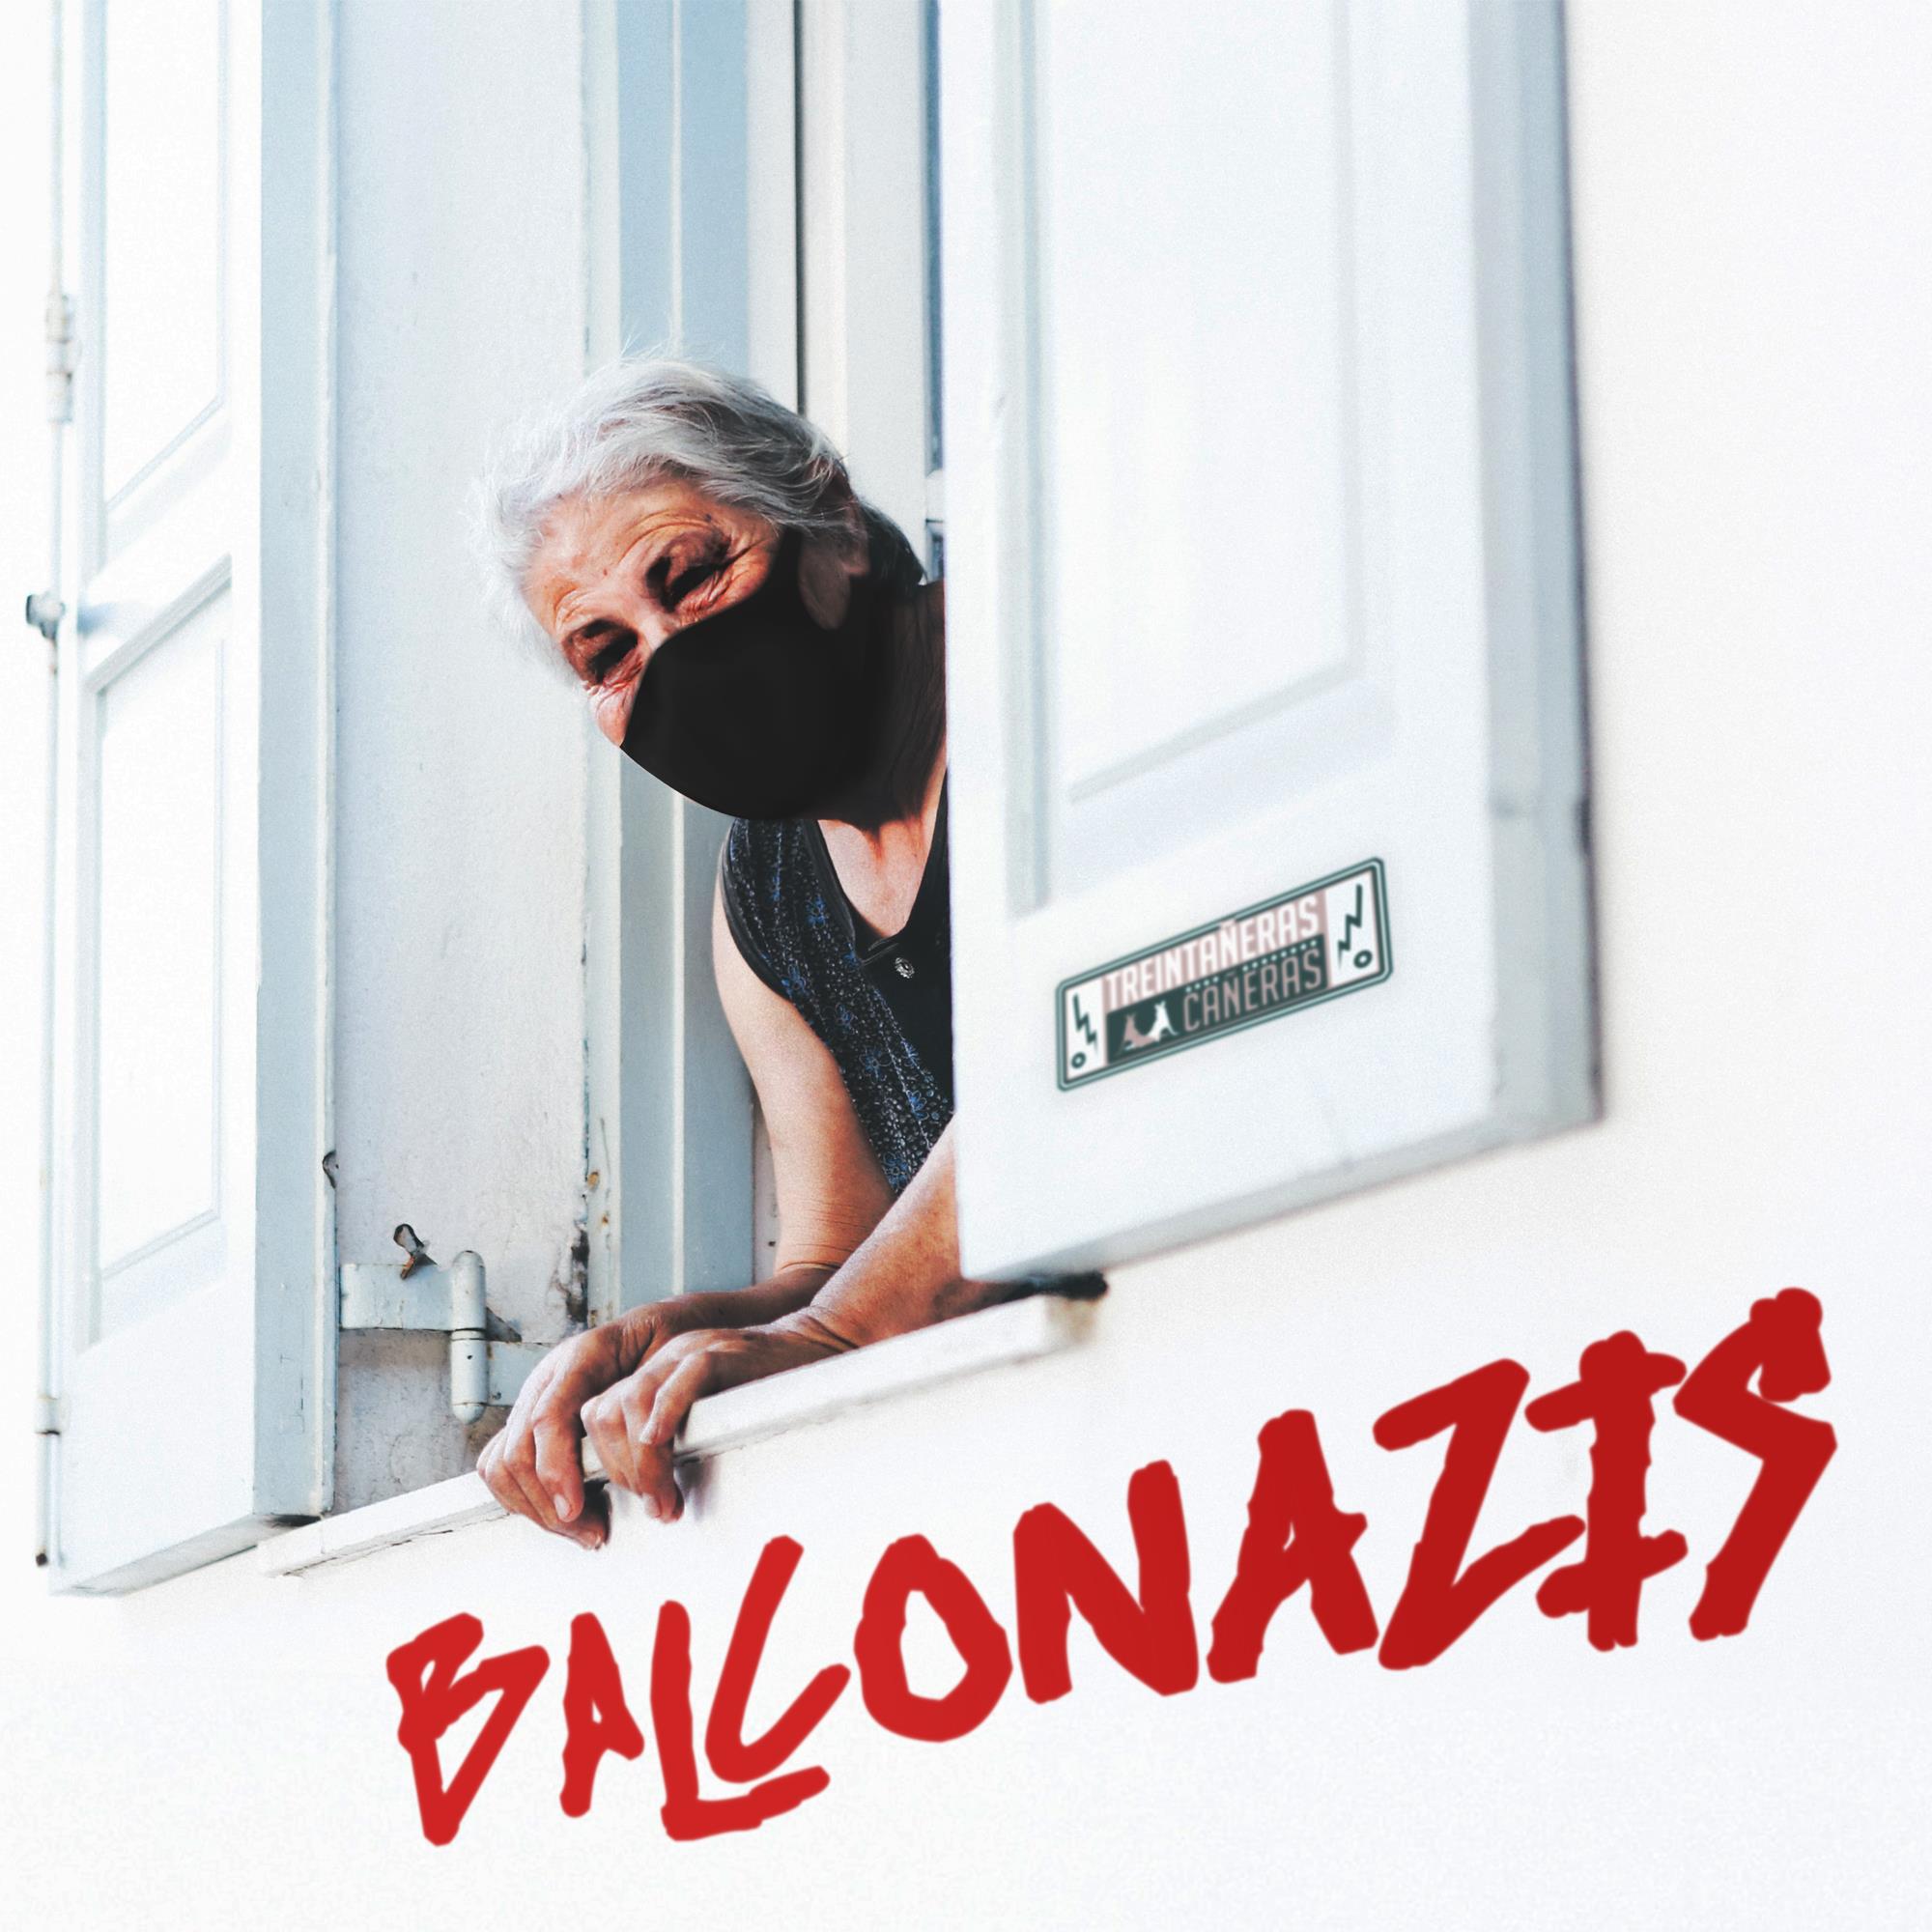 Balconazis (single)